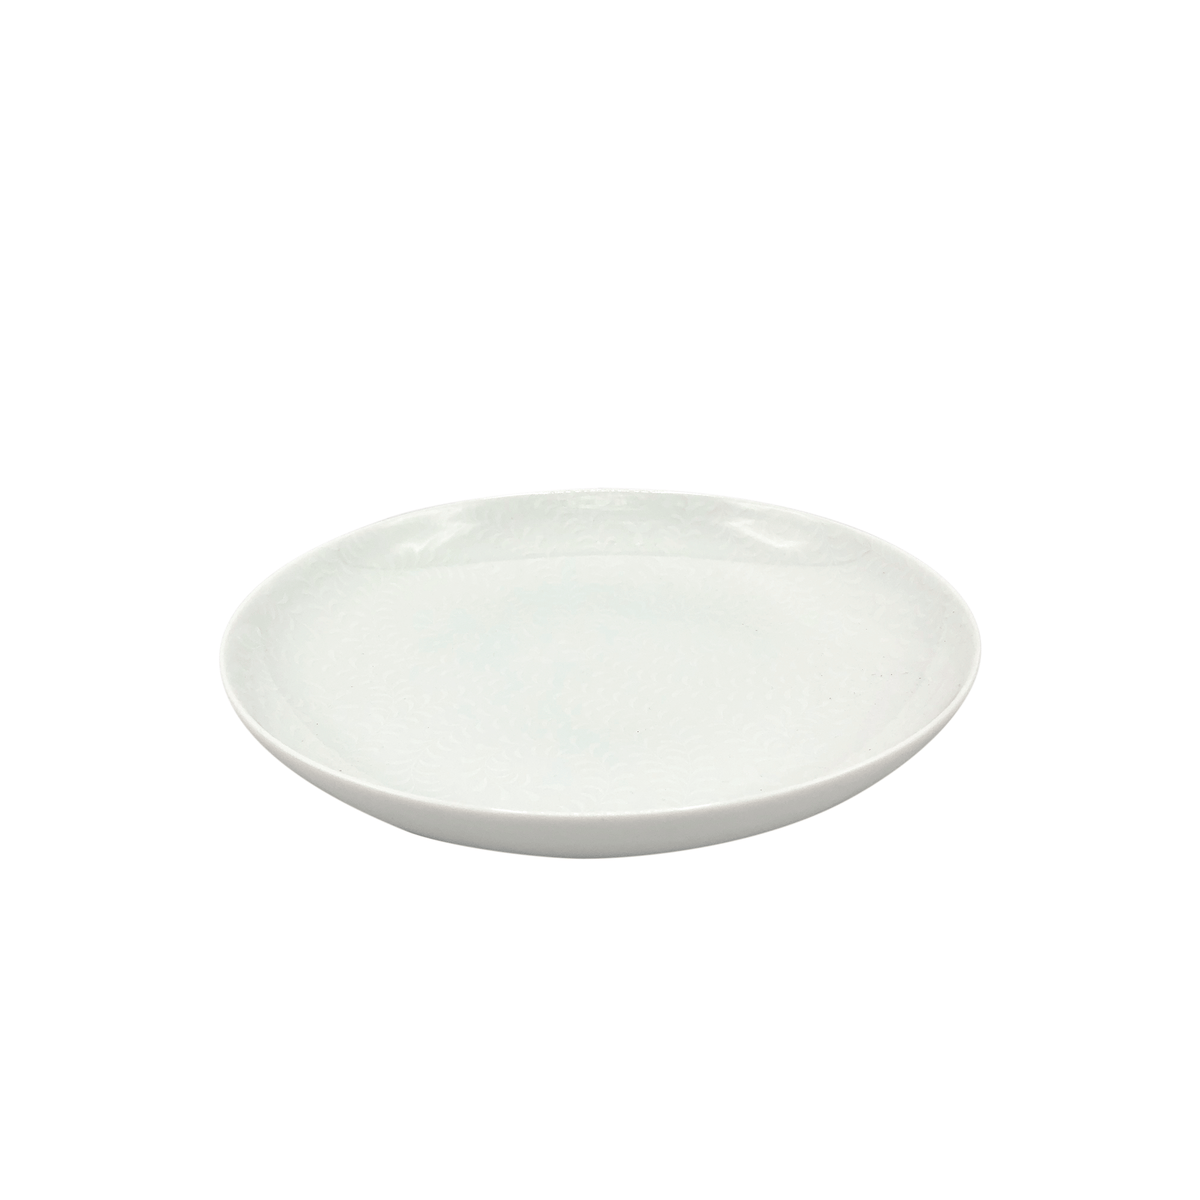 ARJUNA white on white - Pasta plate